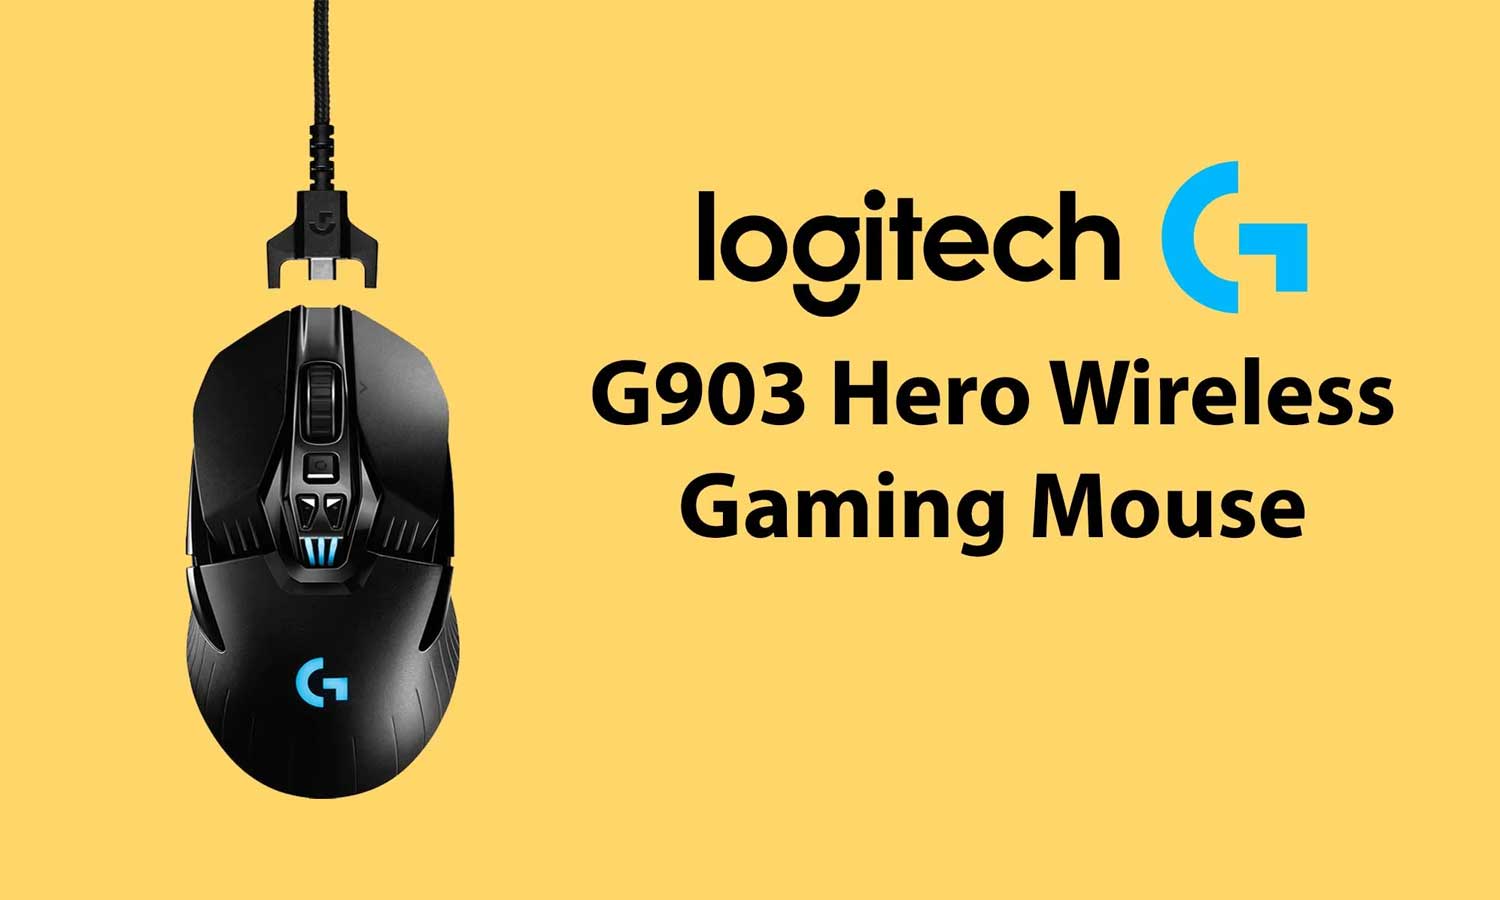 Logitech G903 LIGHTSPEED Wireless Gaming Mouse with HERO Sensor - 910-005670